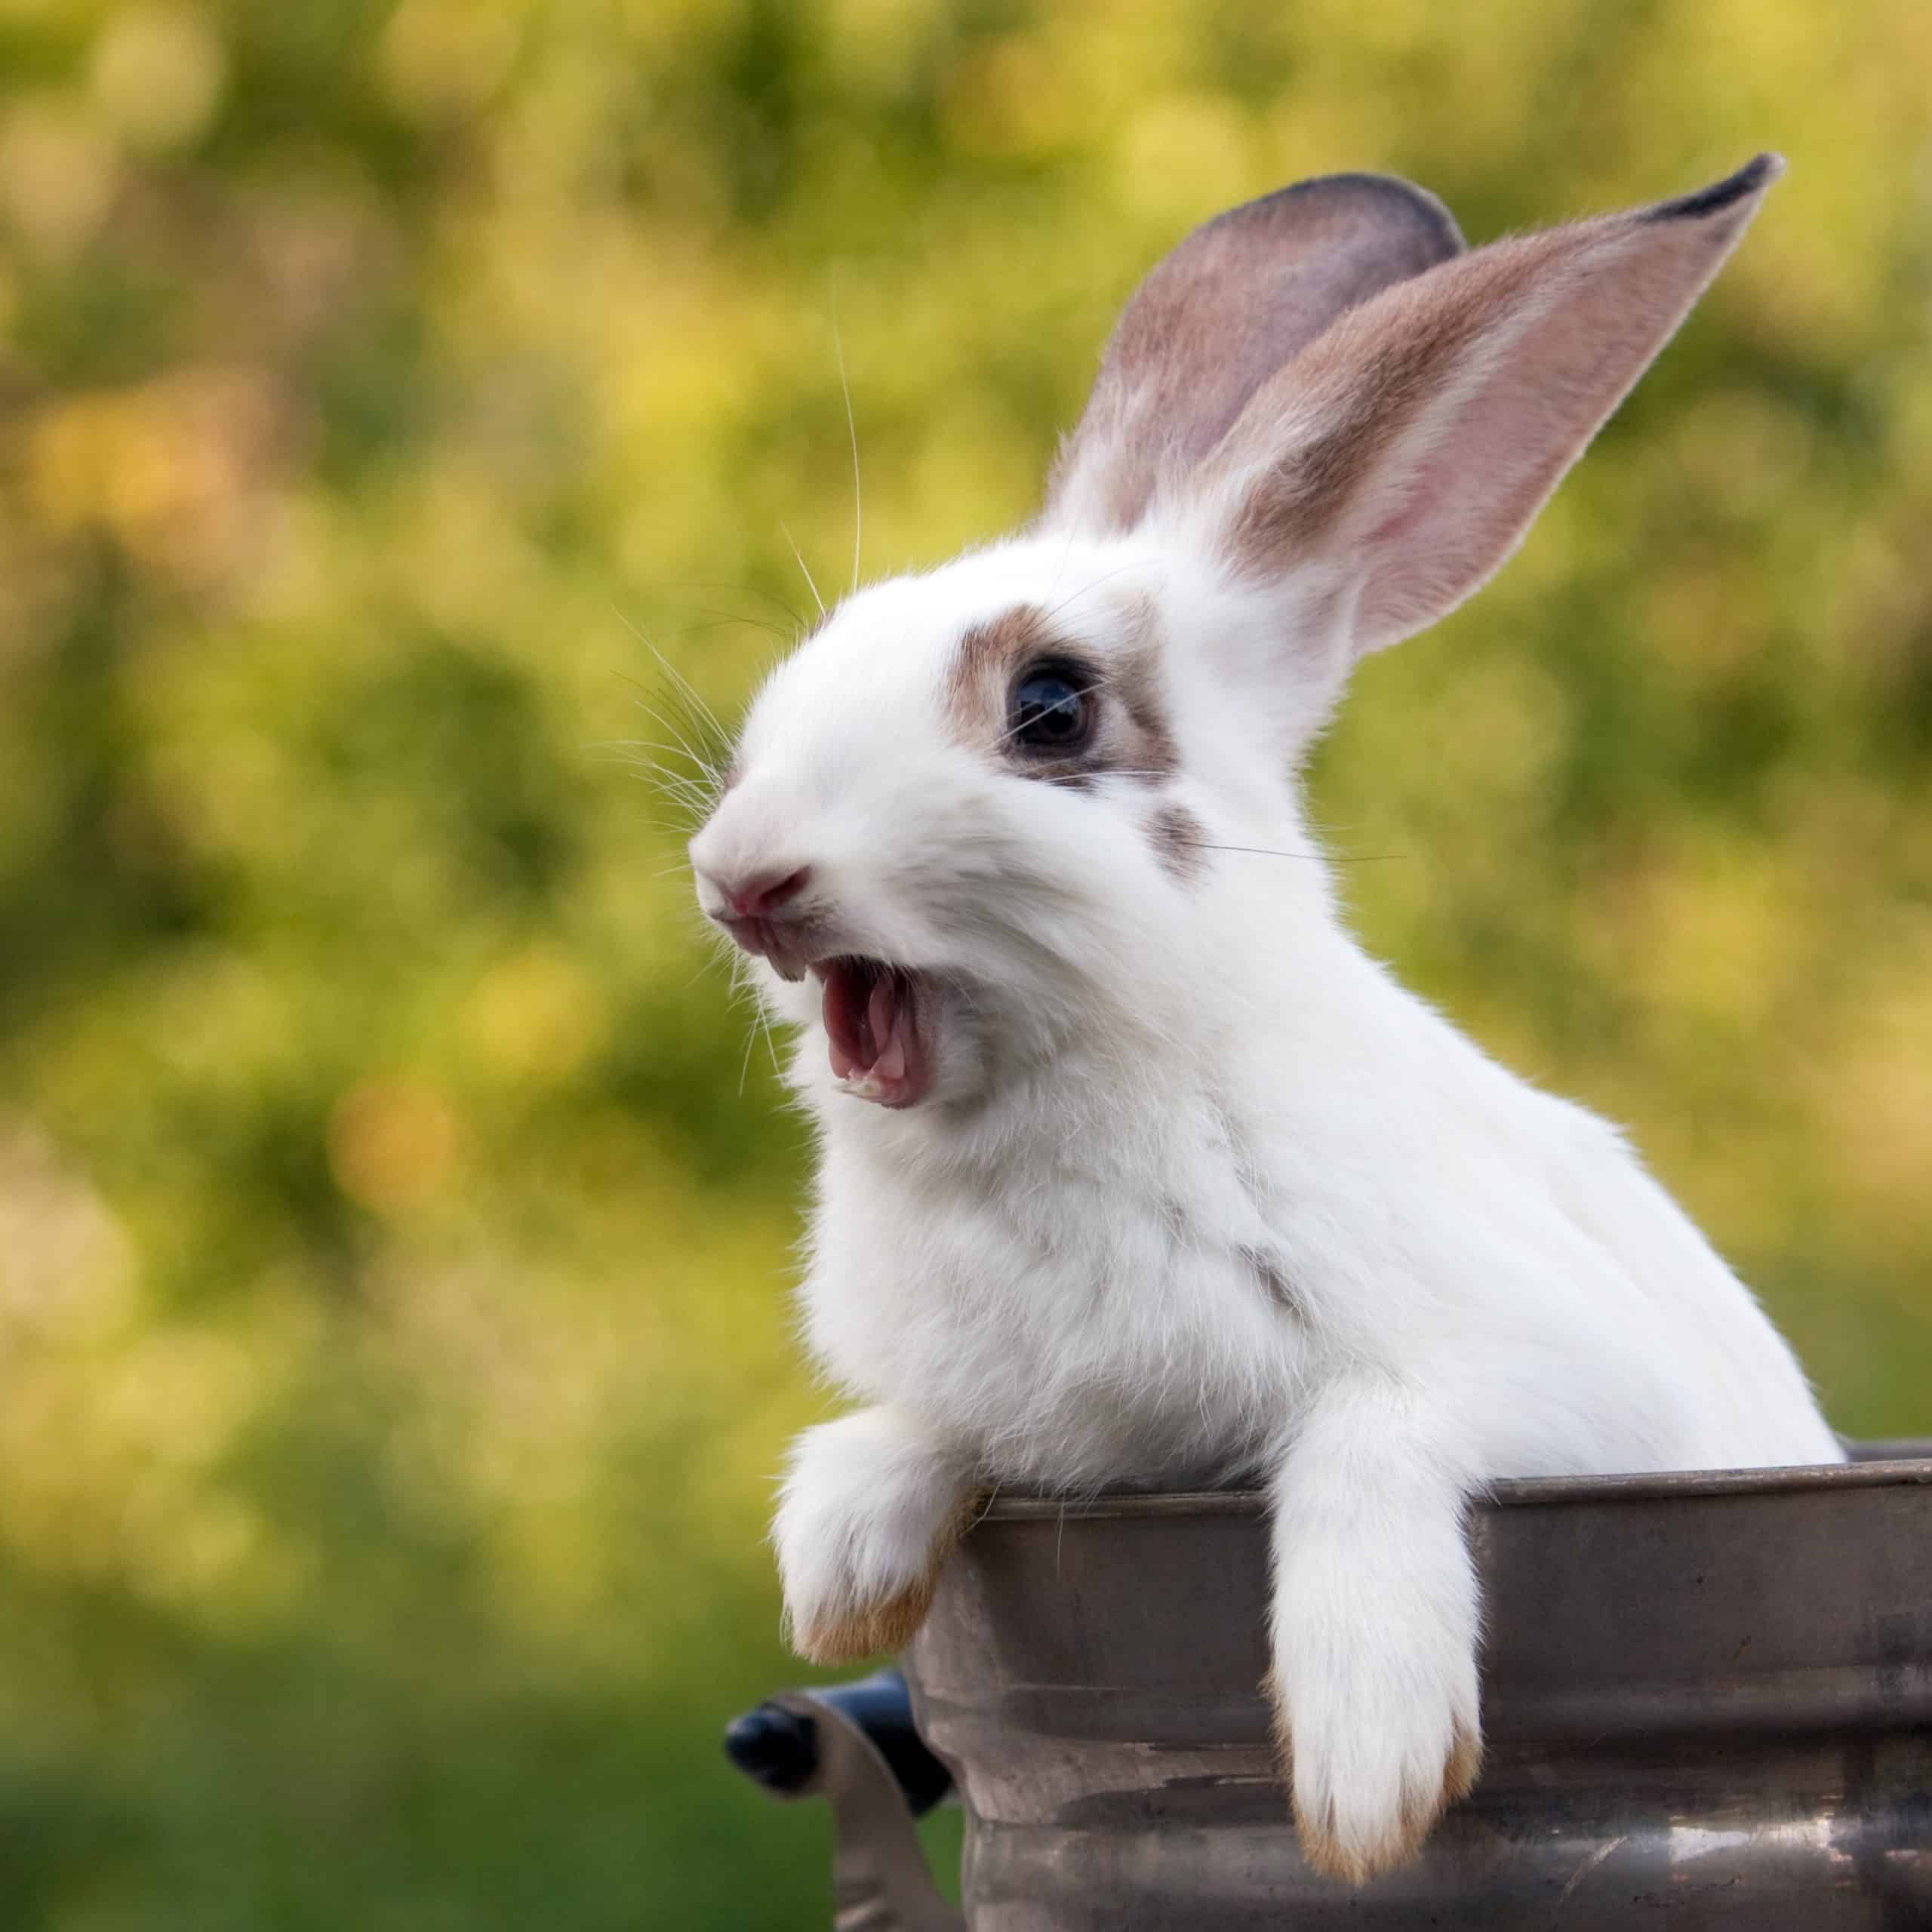 Do rabbits scream for no reason?